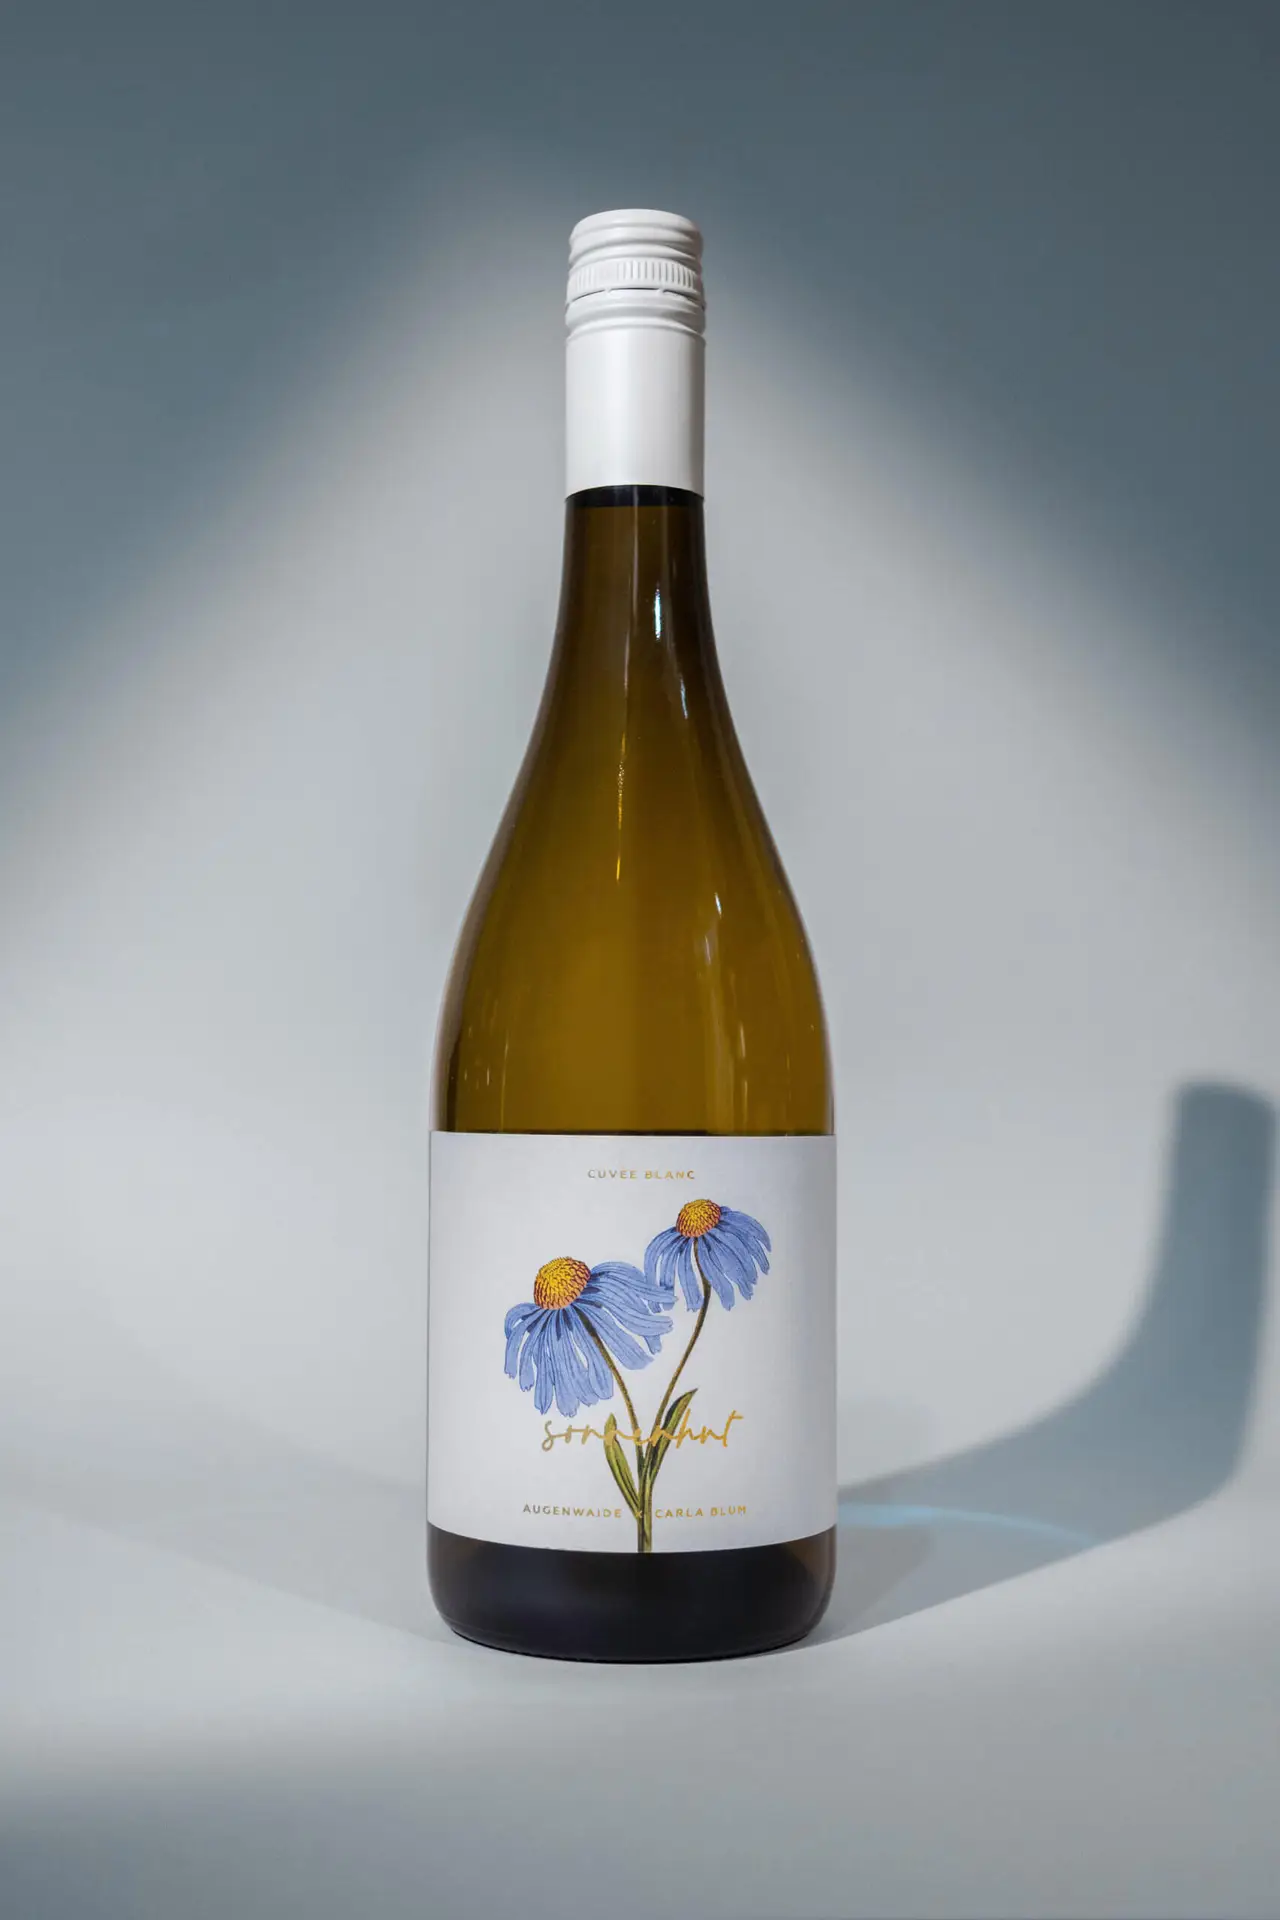 Mona-Wingerter-portfolio-grafiker-grafikdesigner-freelance-art-director-Wine-winebottle-packagingdesign-label-labeldesign-logo-brand-design-Flower-Augenwaide-Carla-Blum-2